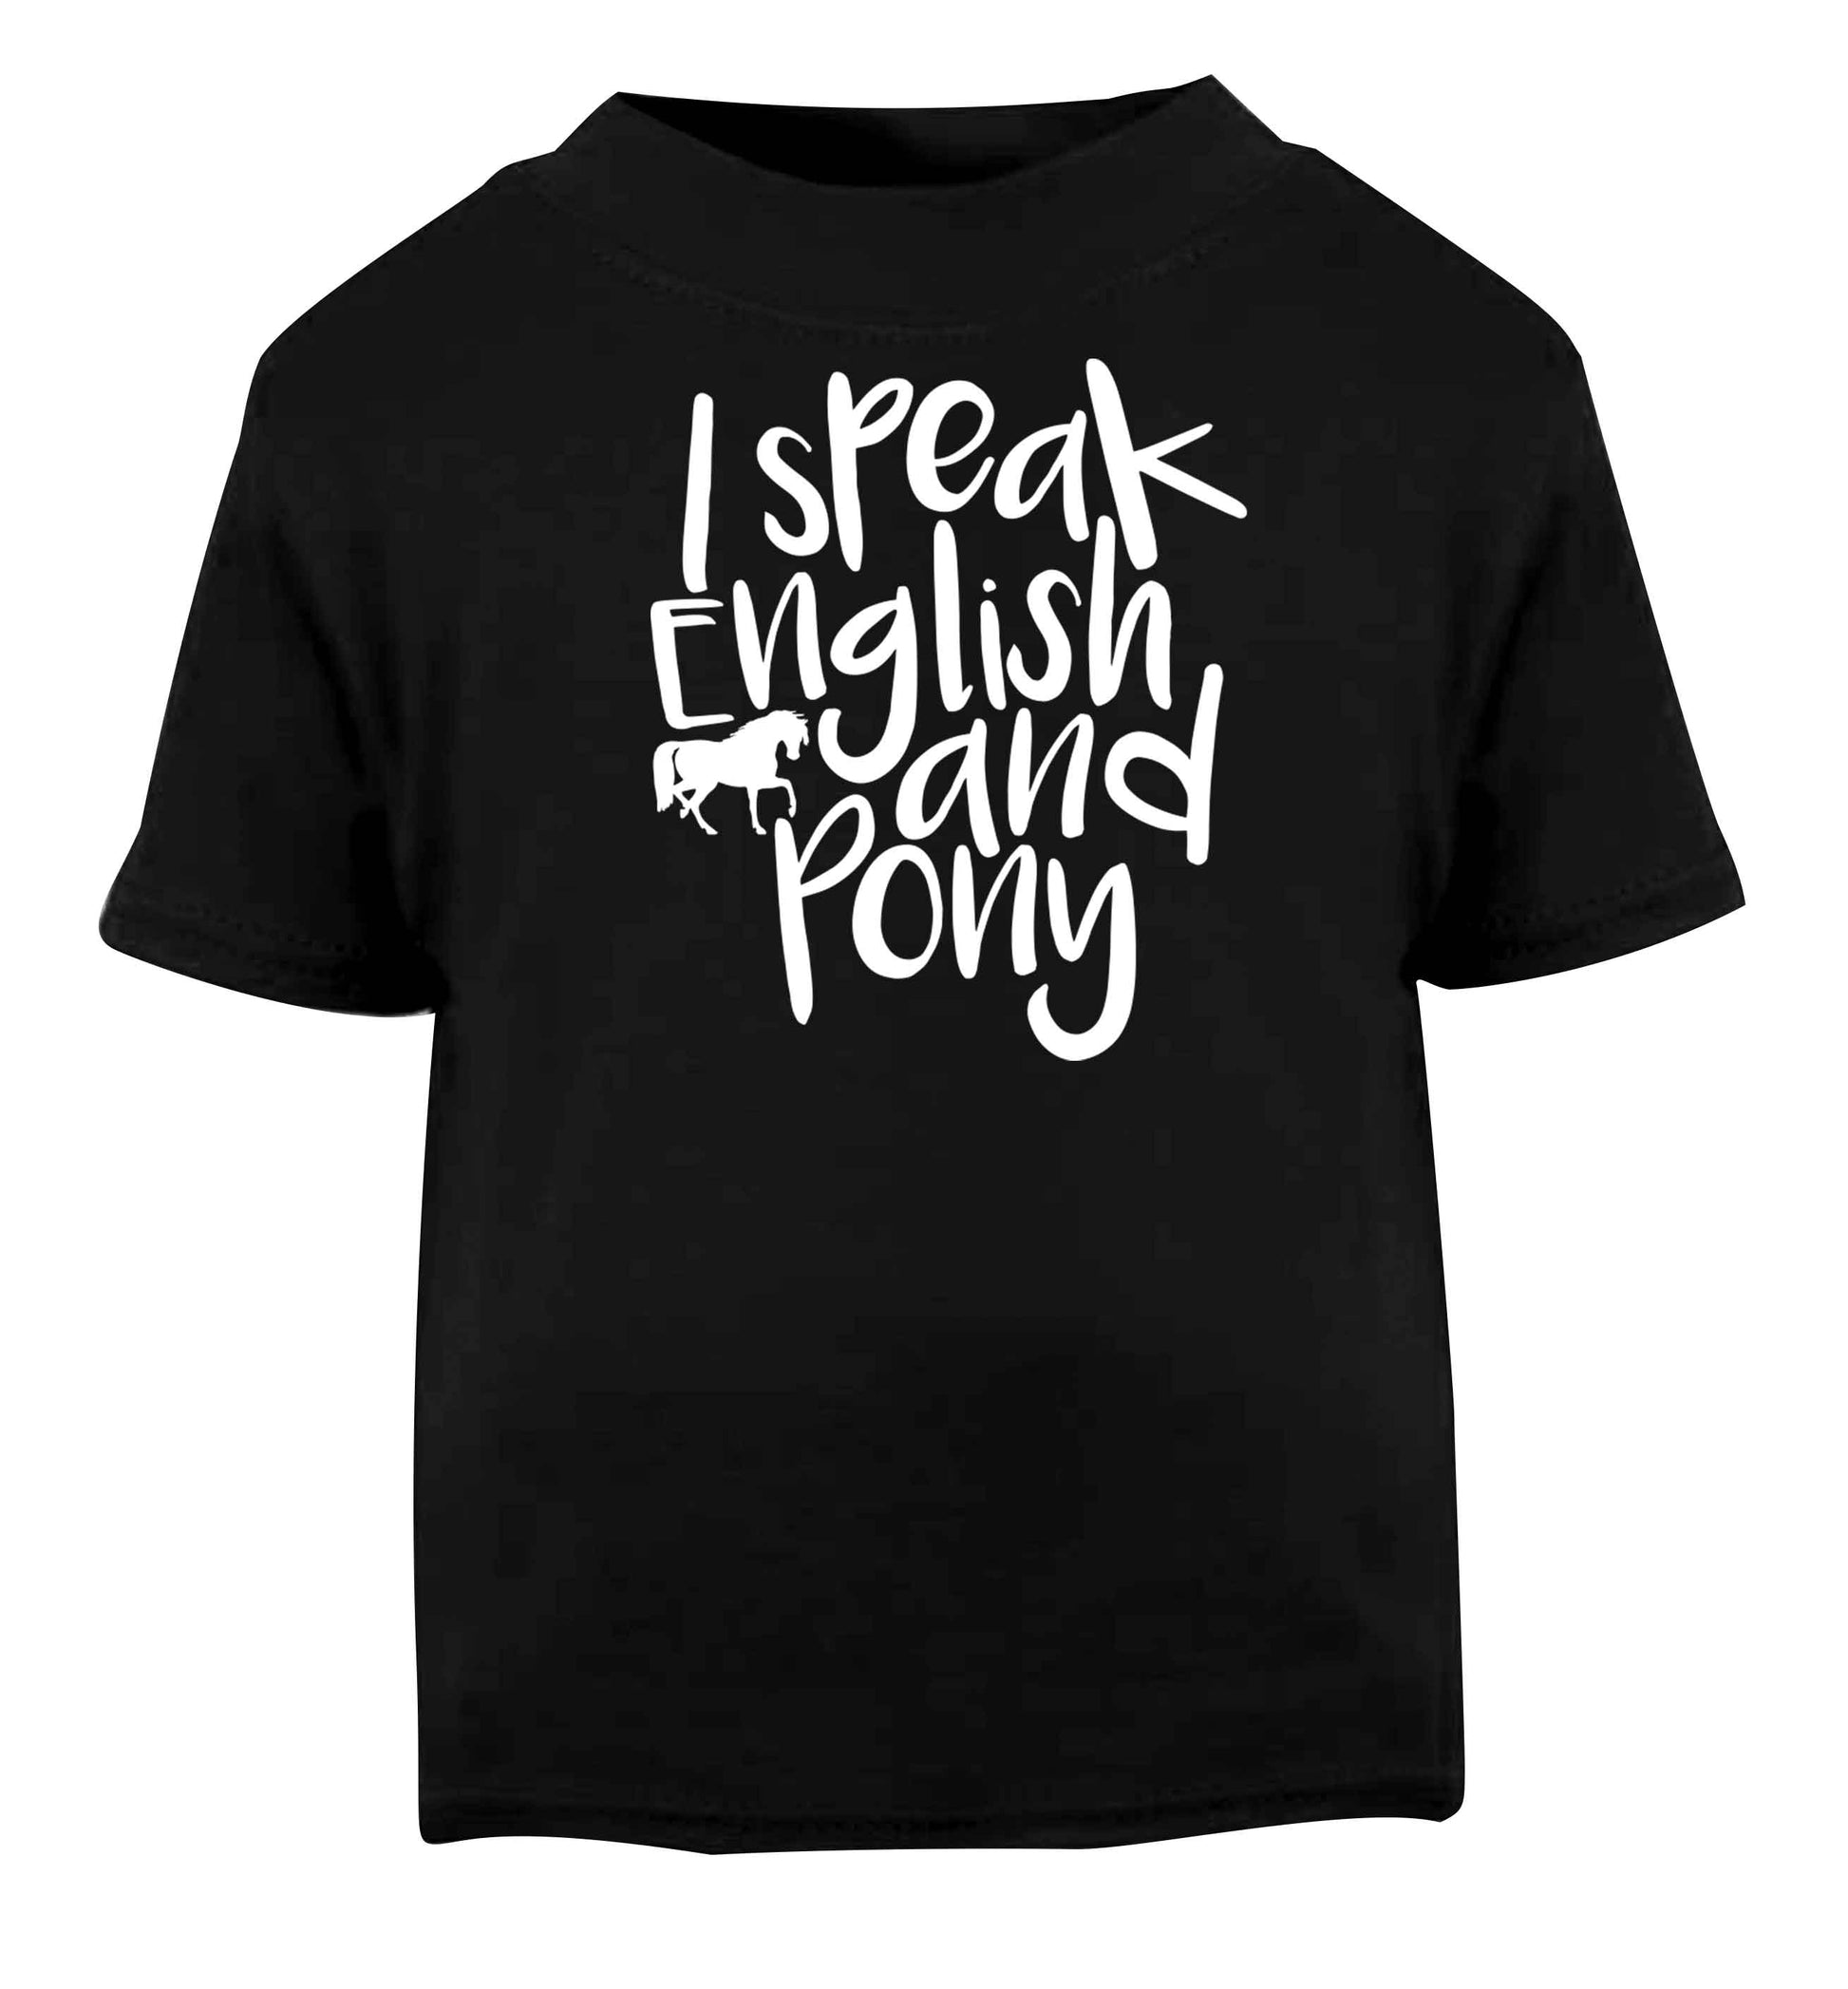 I speak English and pony Black baby toddler Tshirt 2 years